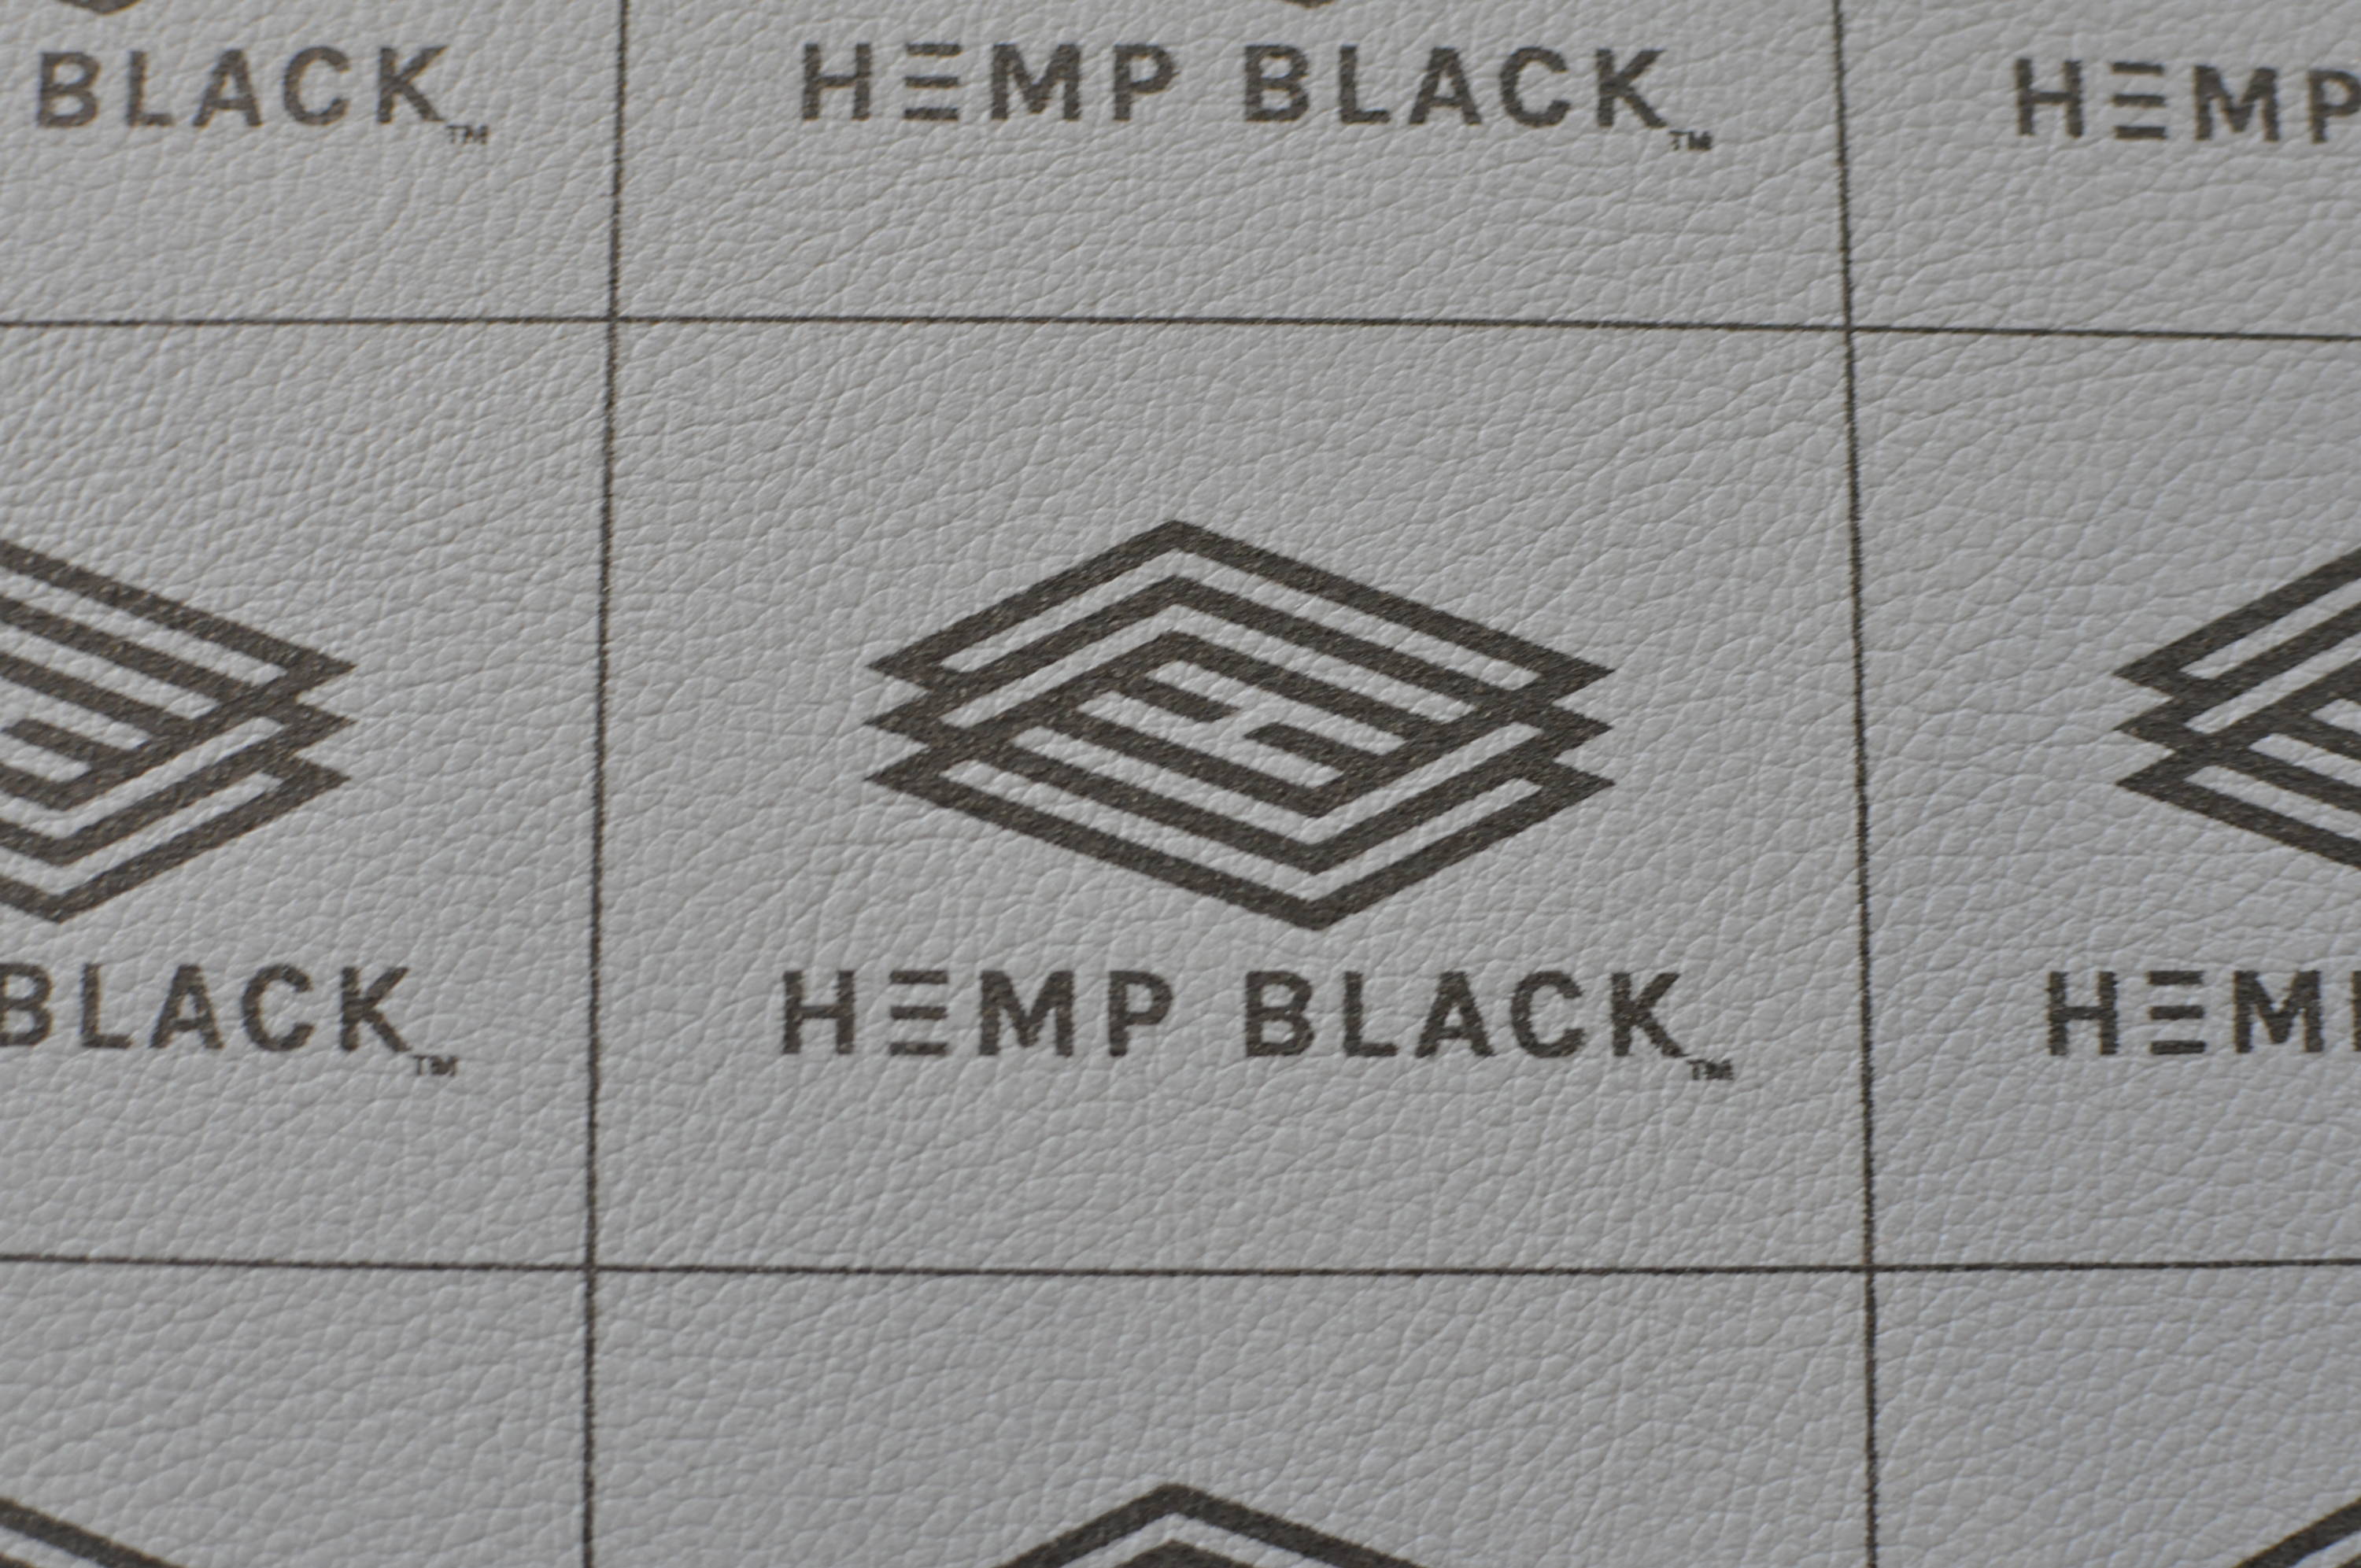 HEMP BLACK / ink printed on HEMP BLACK / hide leather alternative